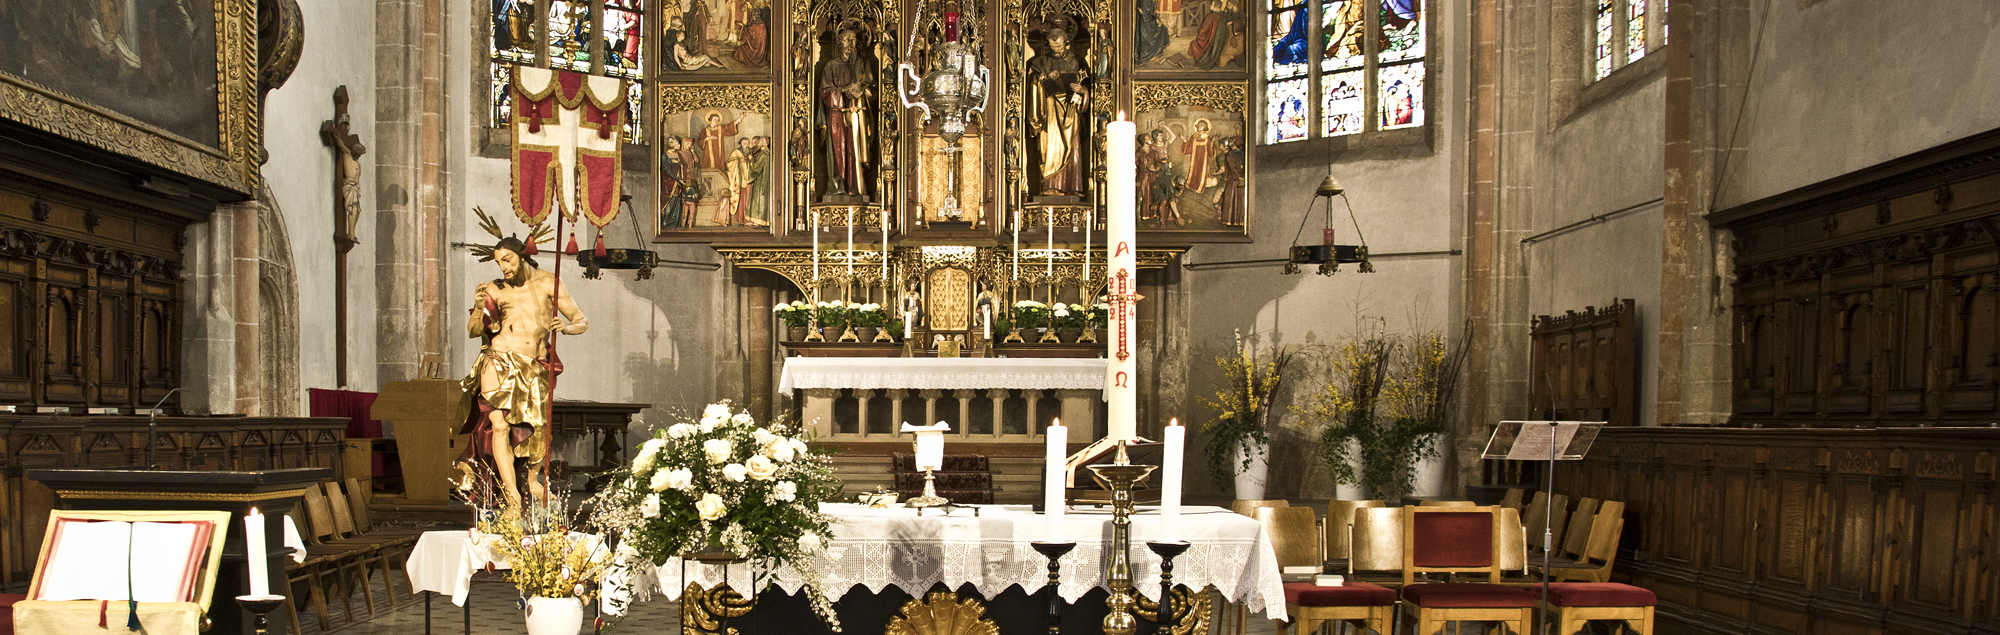 Ostern in St. Stephan